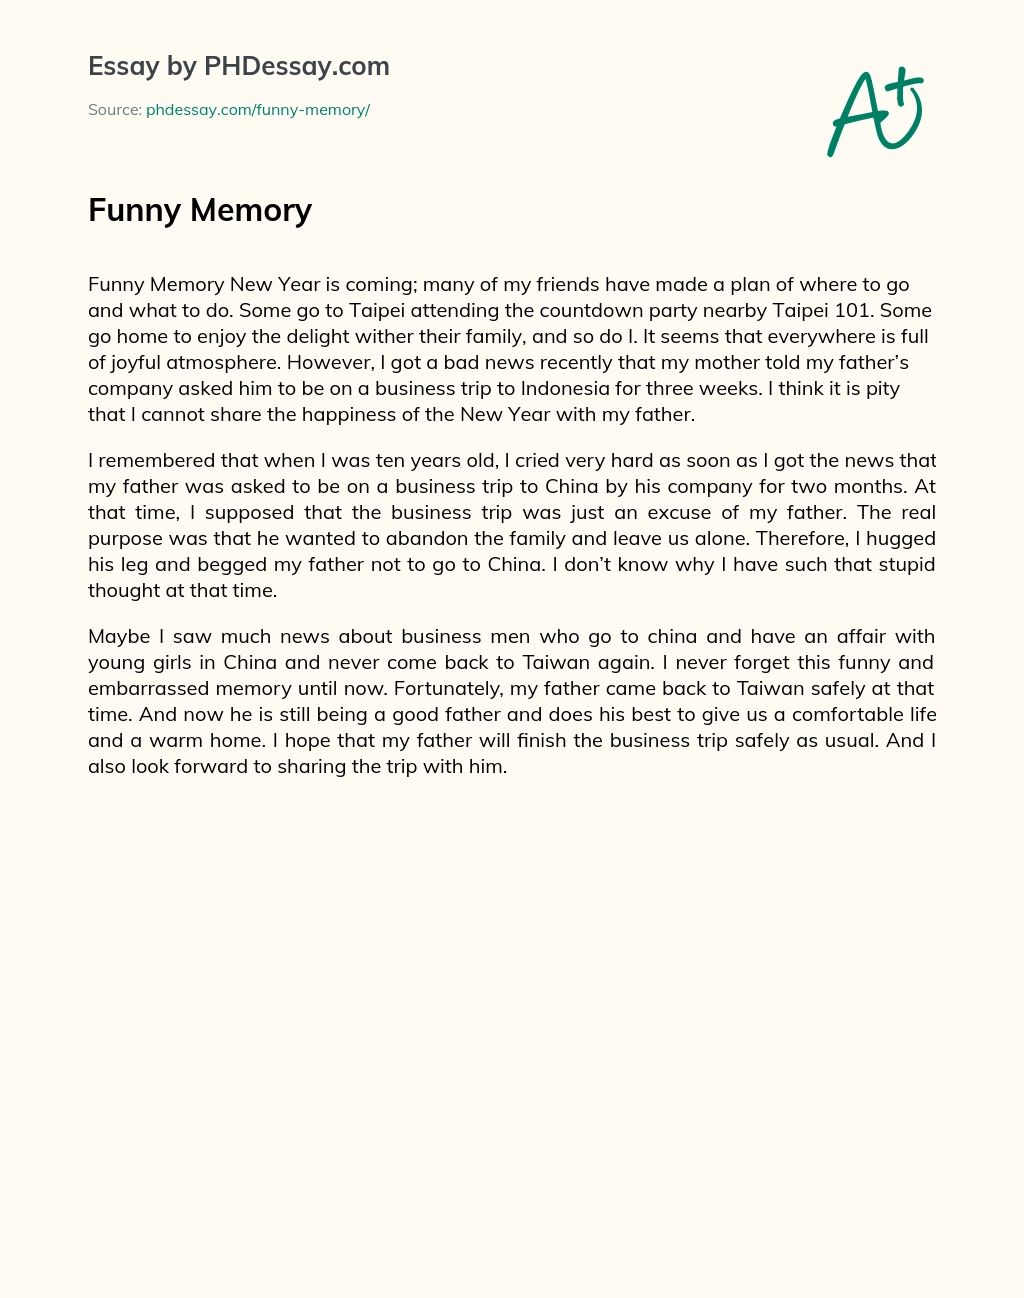 Funny Memory essay